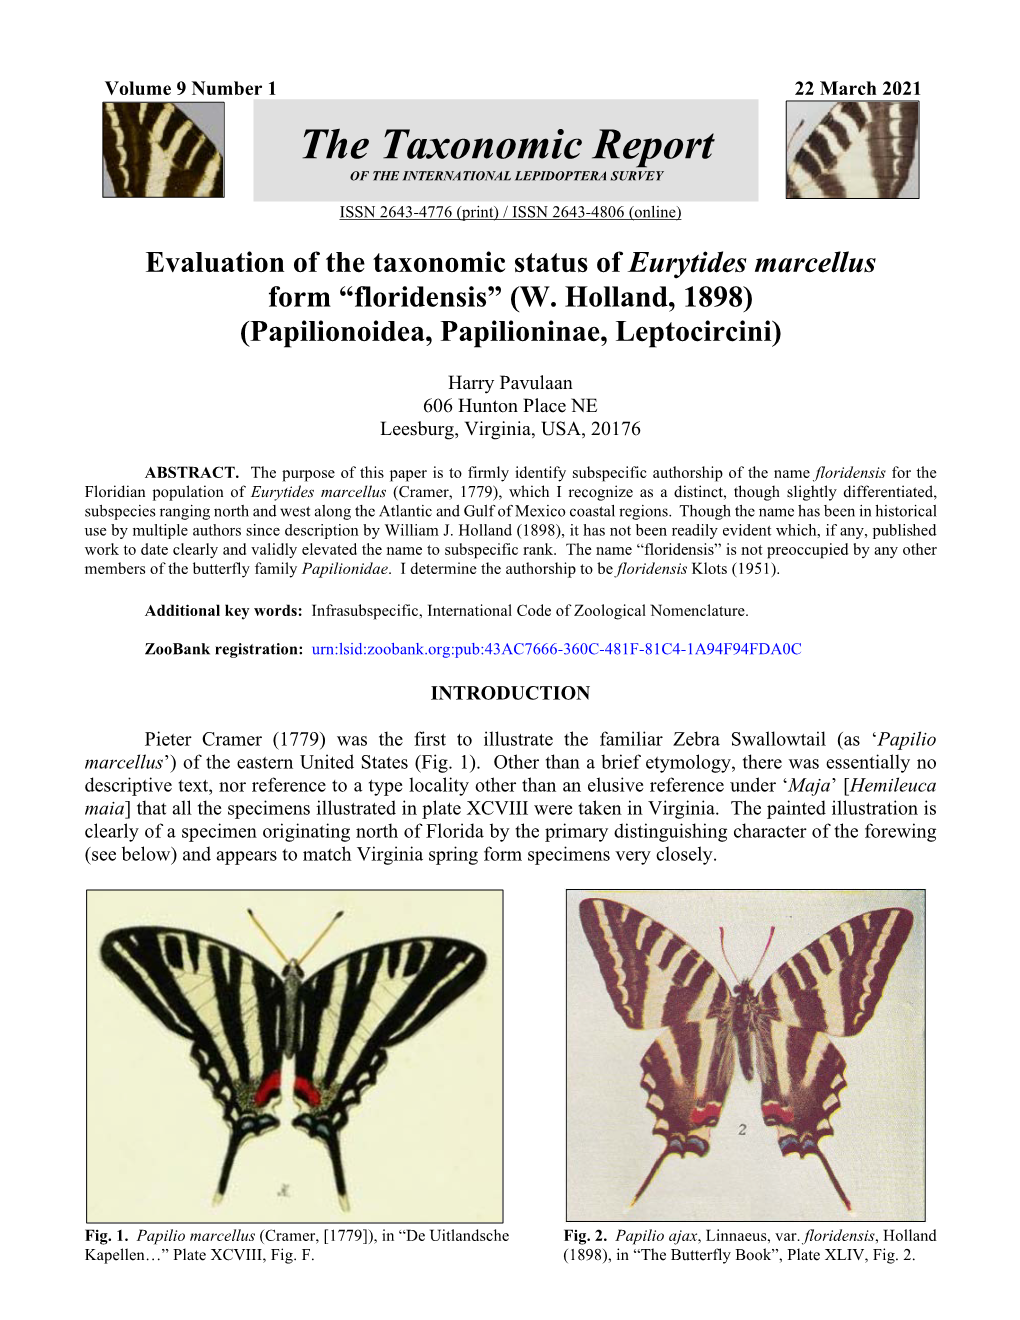 Bionomic Studies of the Citrus Butterfly Papilio